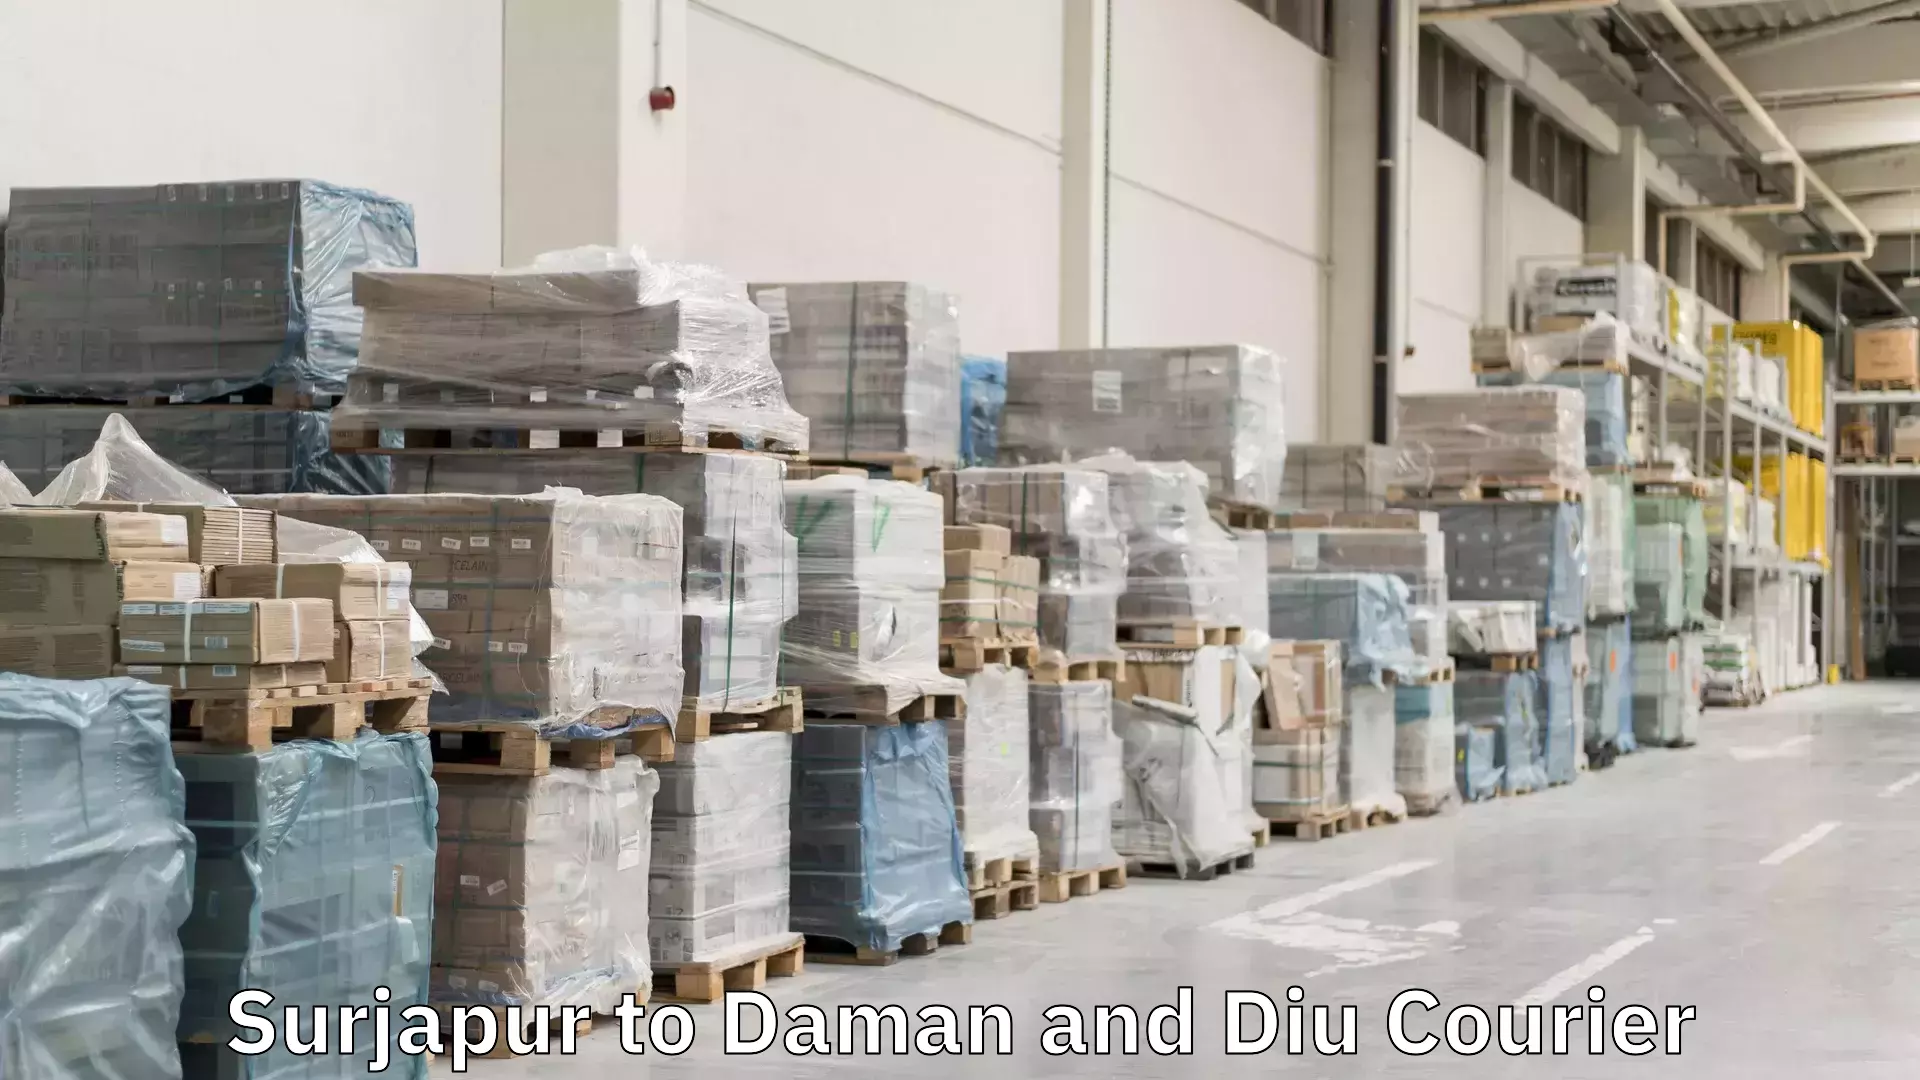 Courier service comparison Surjapur to Daman and Diu